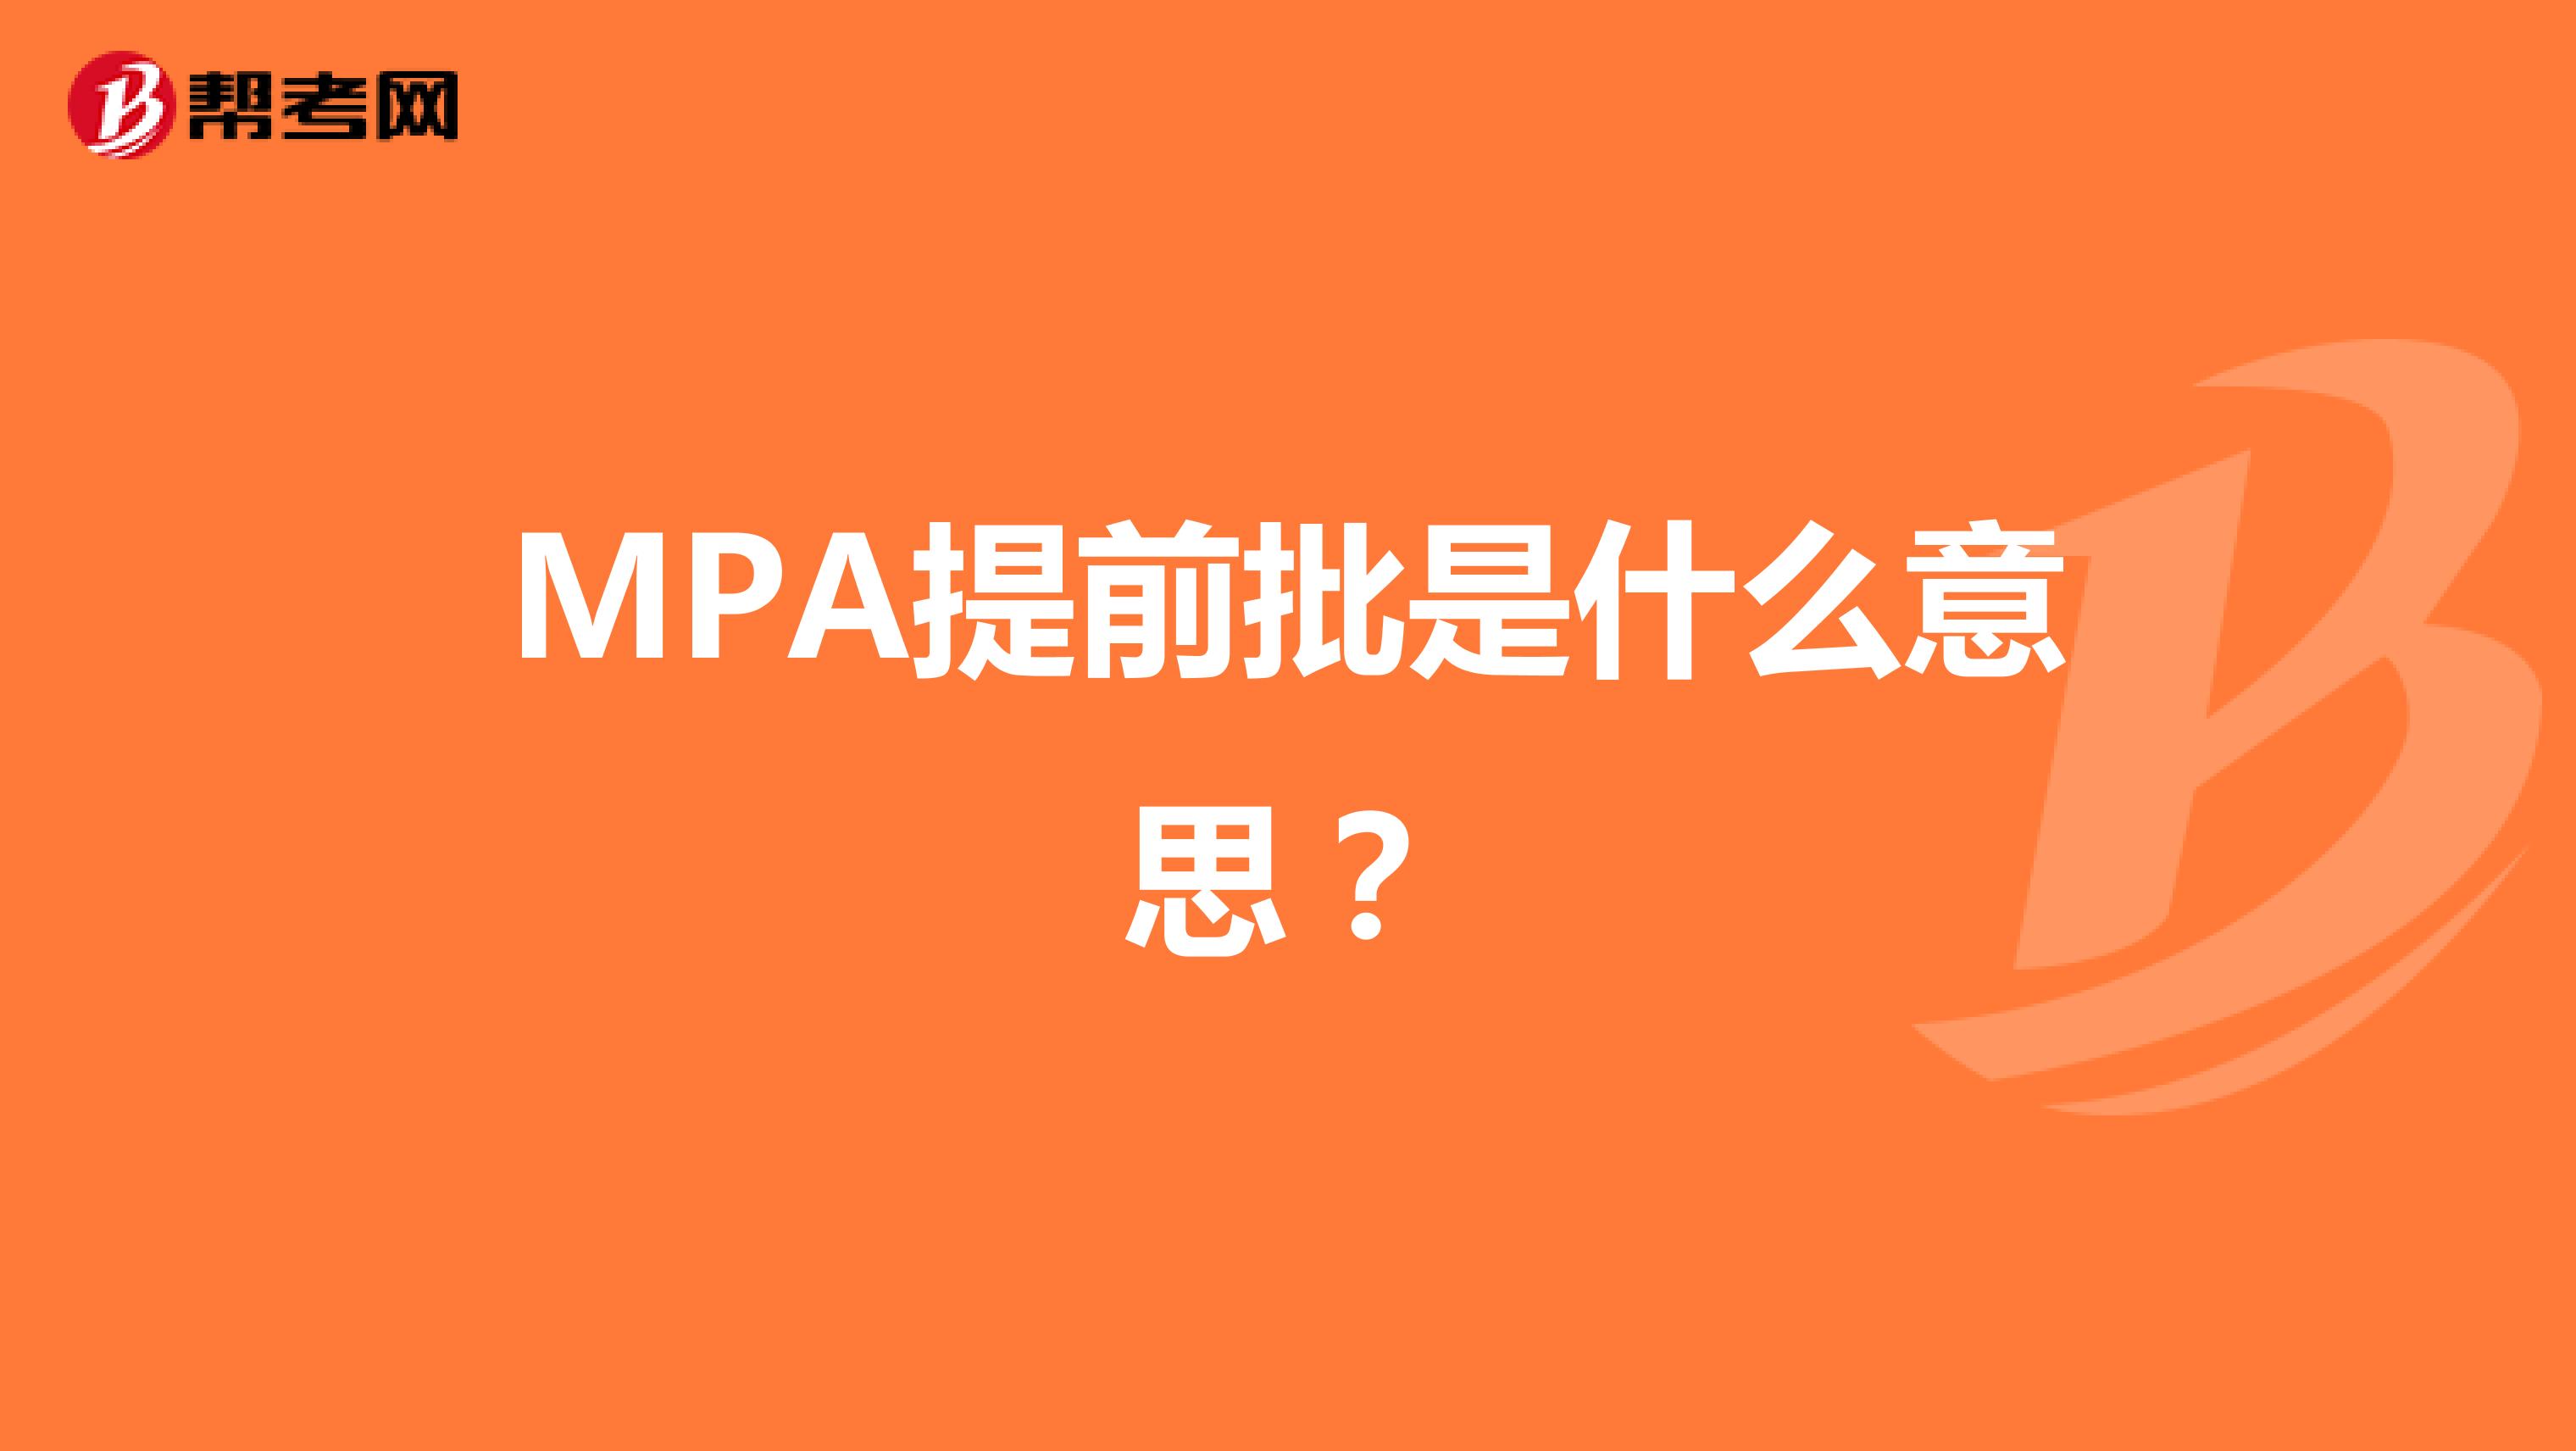 MPA提前批是什么意思？